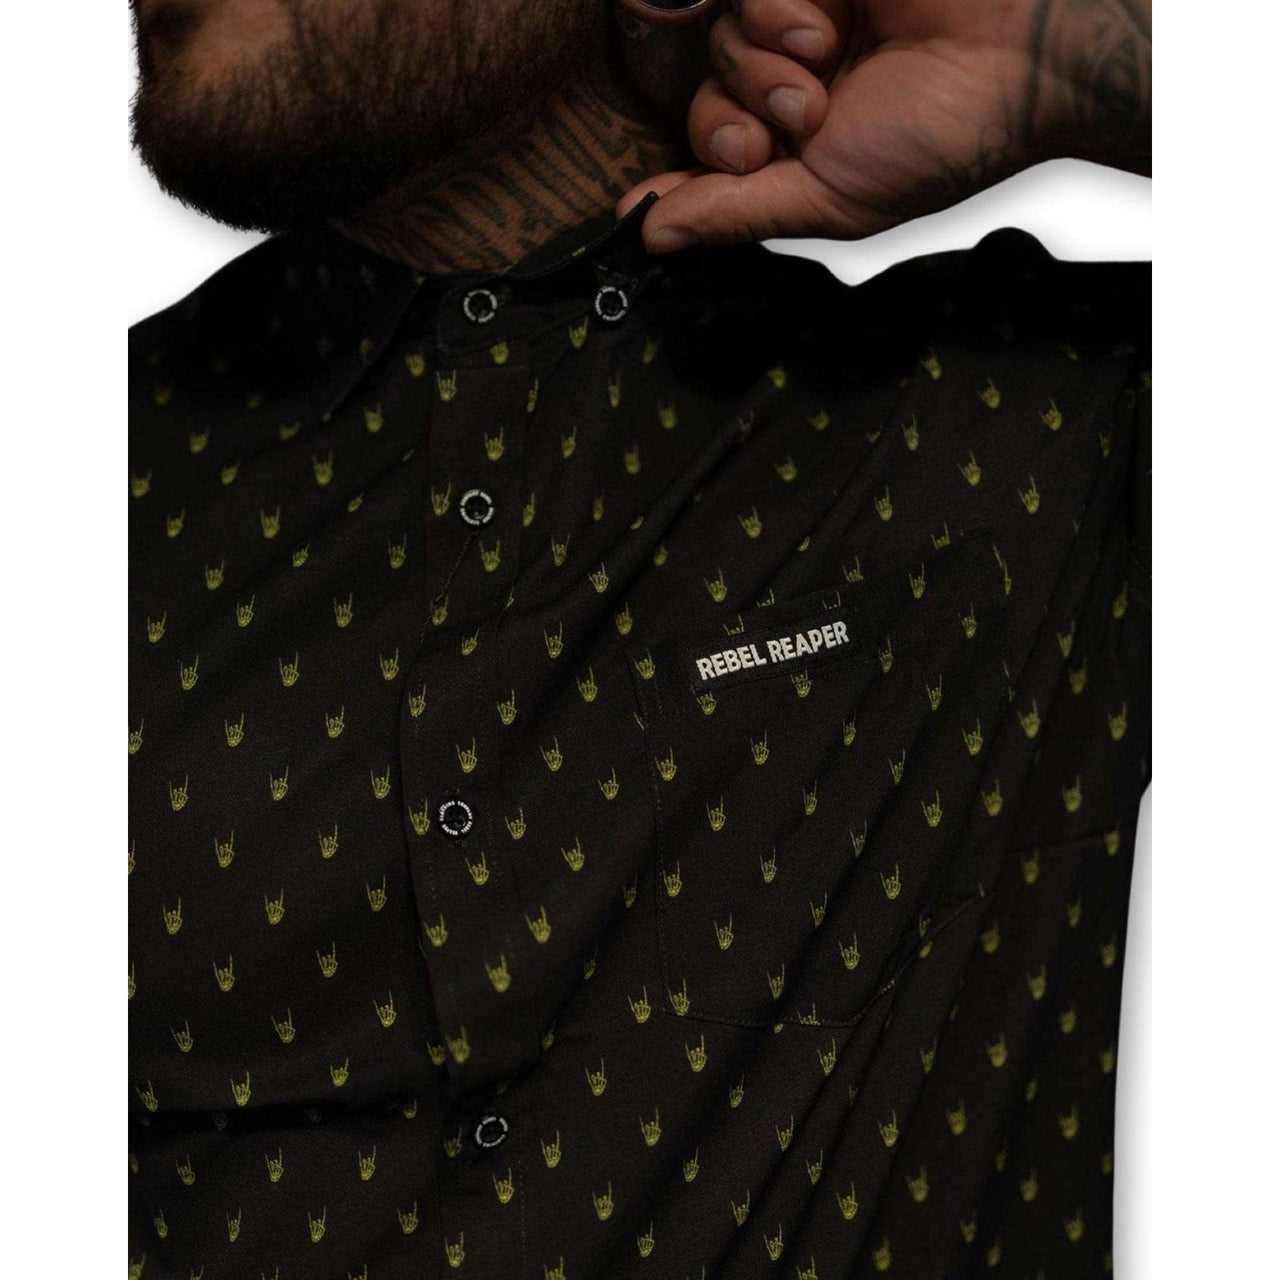 Metal Hand | Button Up Shirt | Black & Yellow